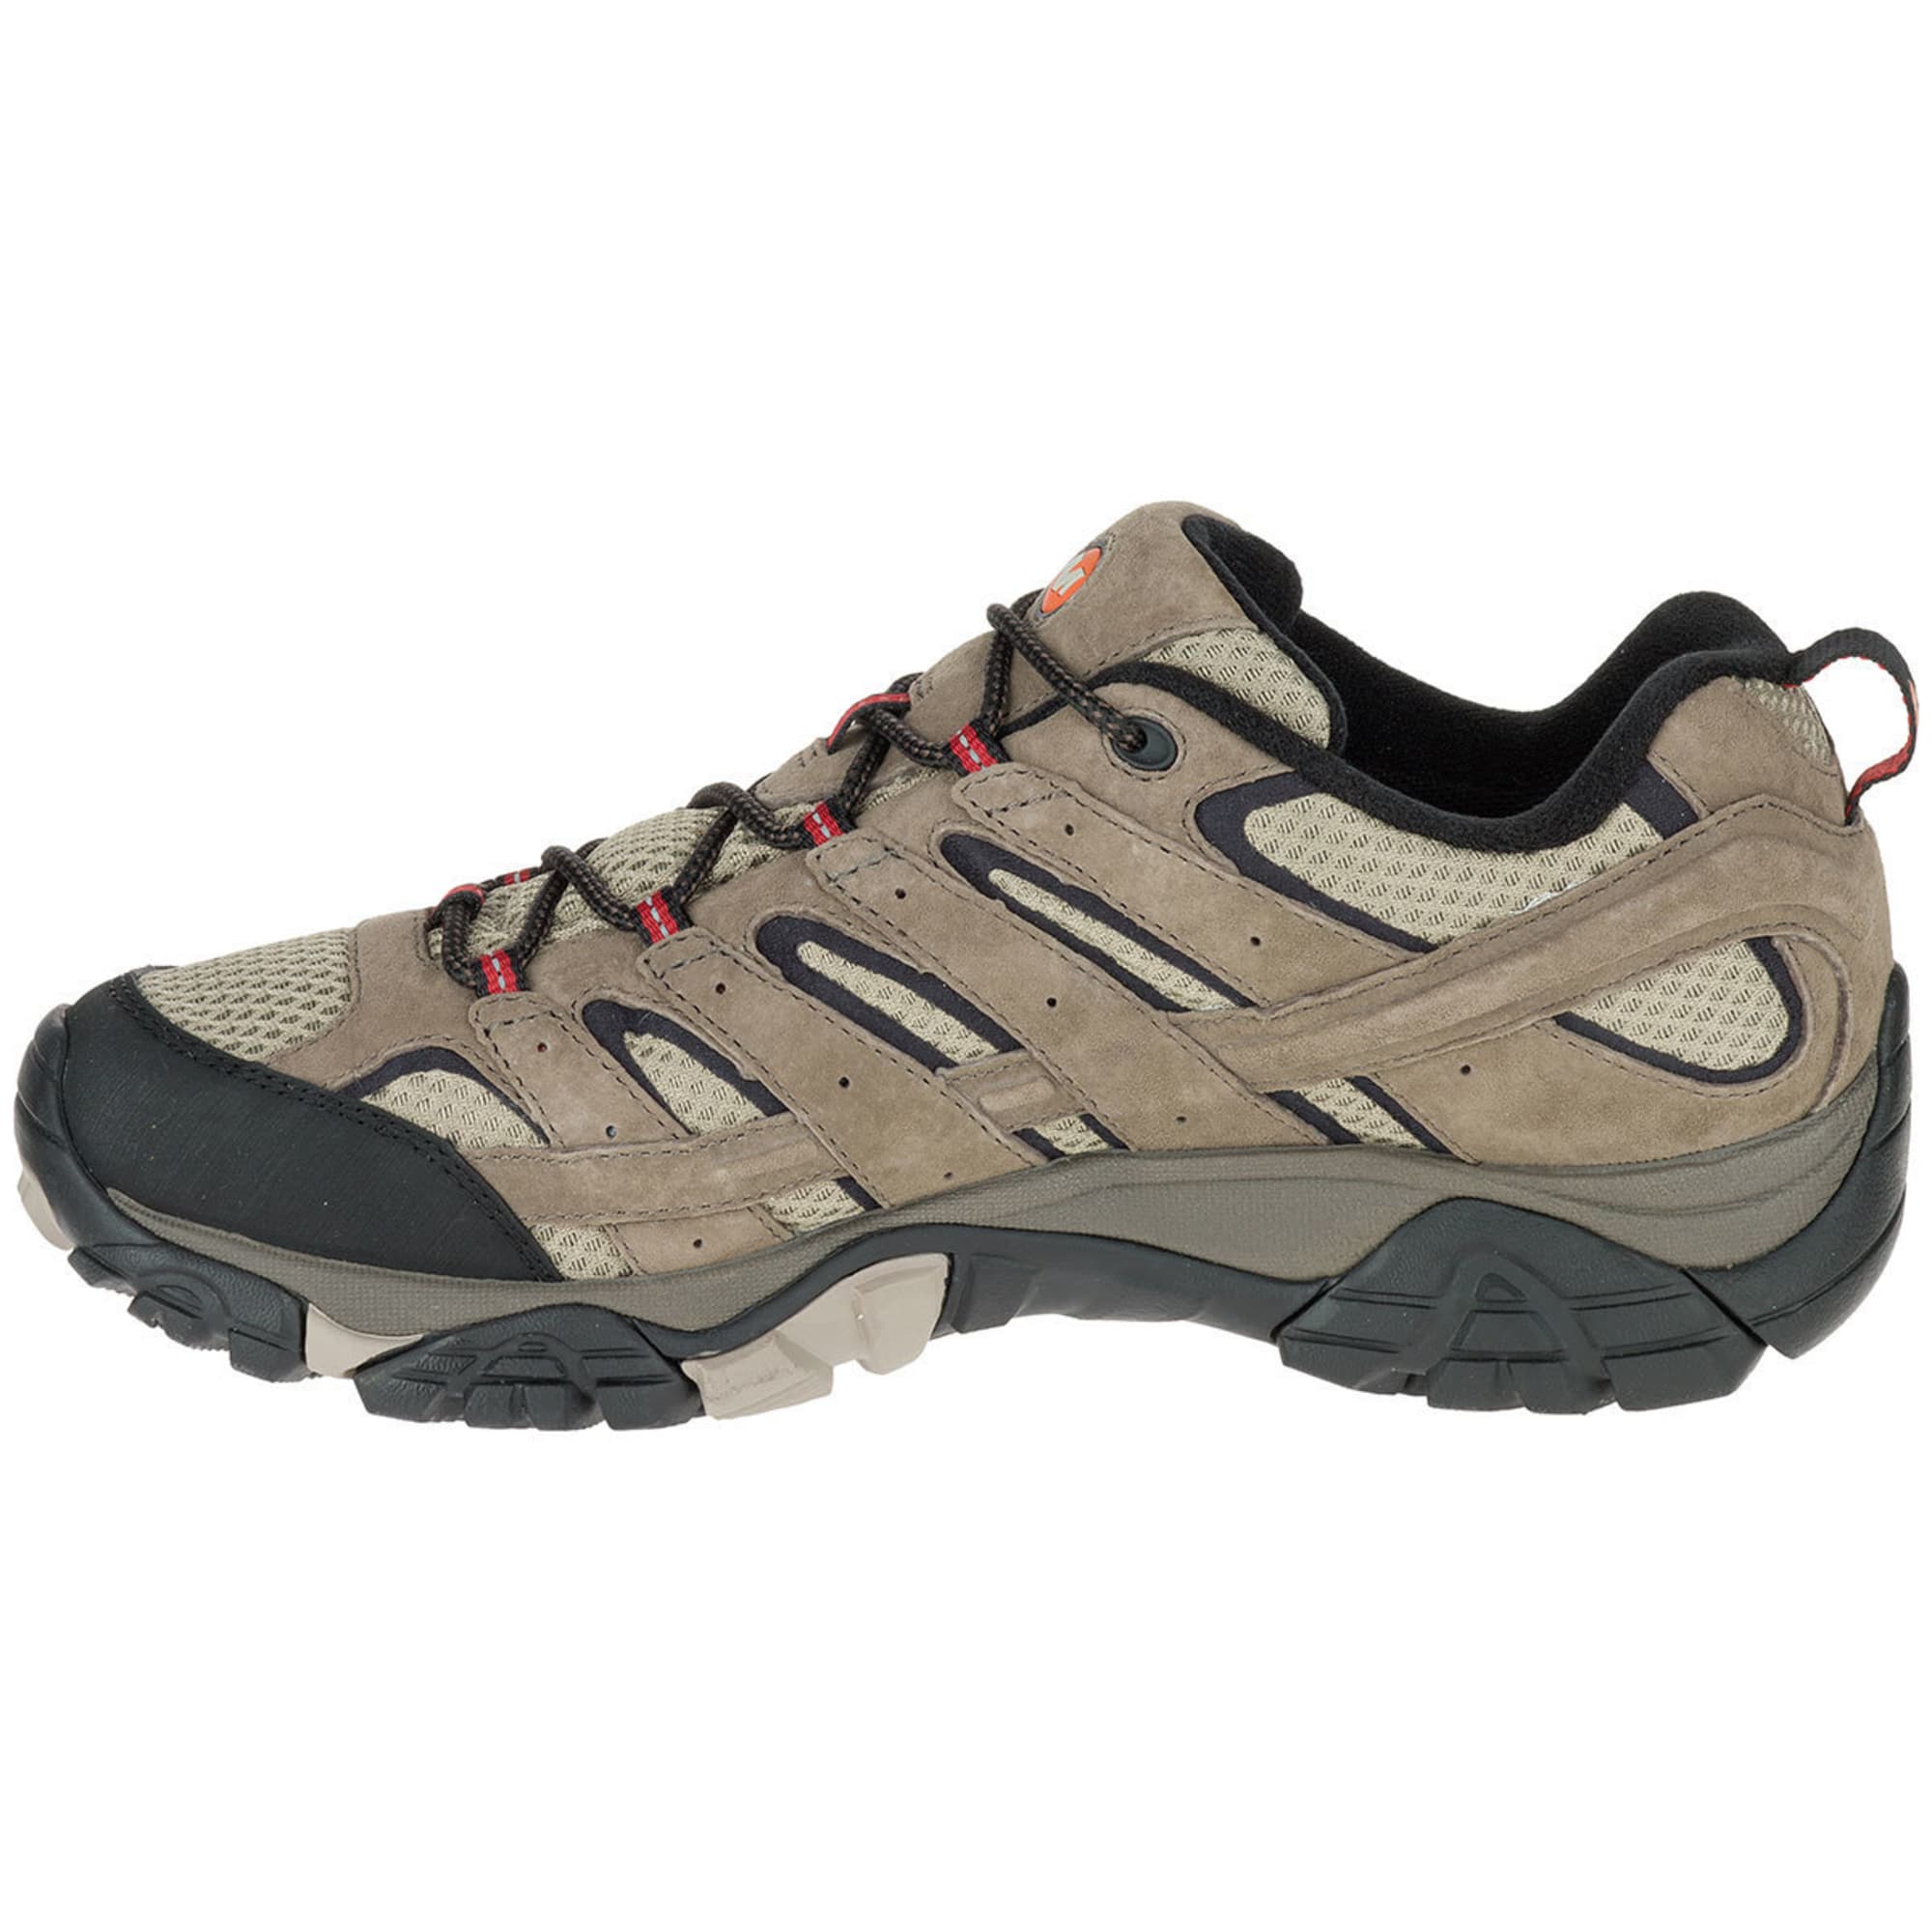 MERRELL Men's Moab 2 Waterproof Low Hiking Shoes, Wide, Bark Brown Eastern Mountain Sports